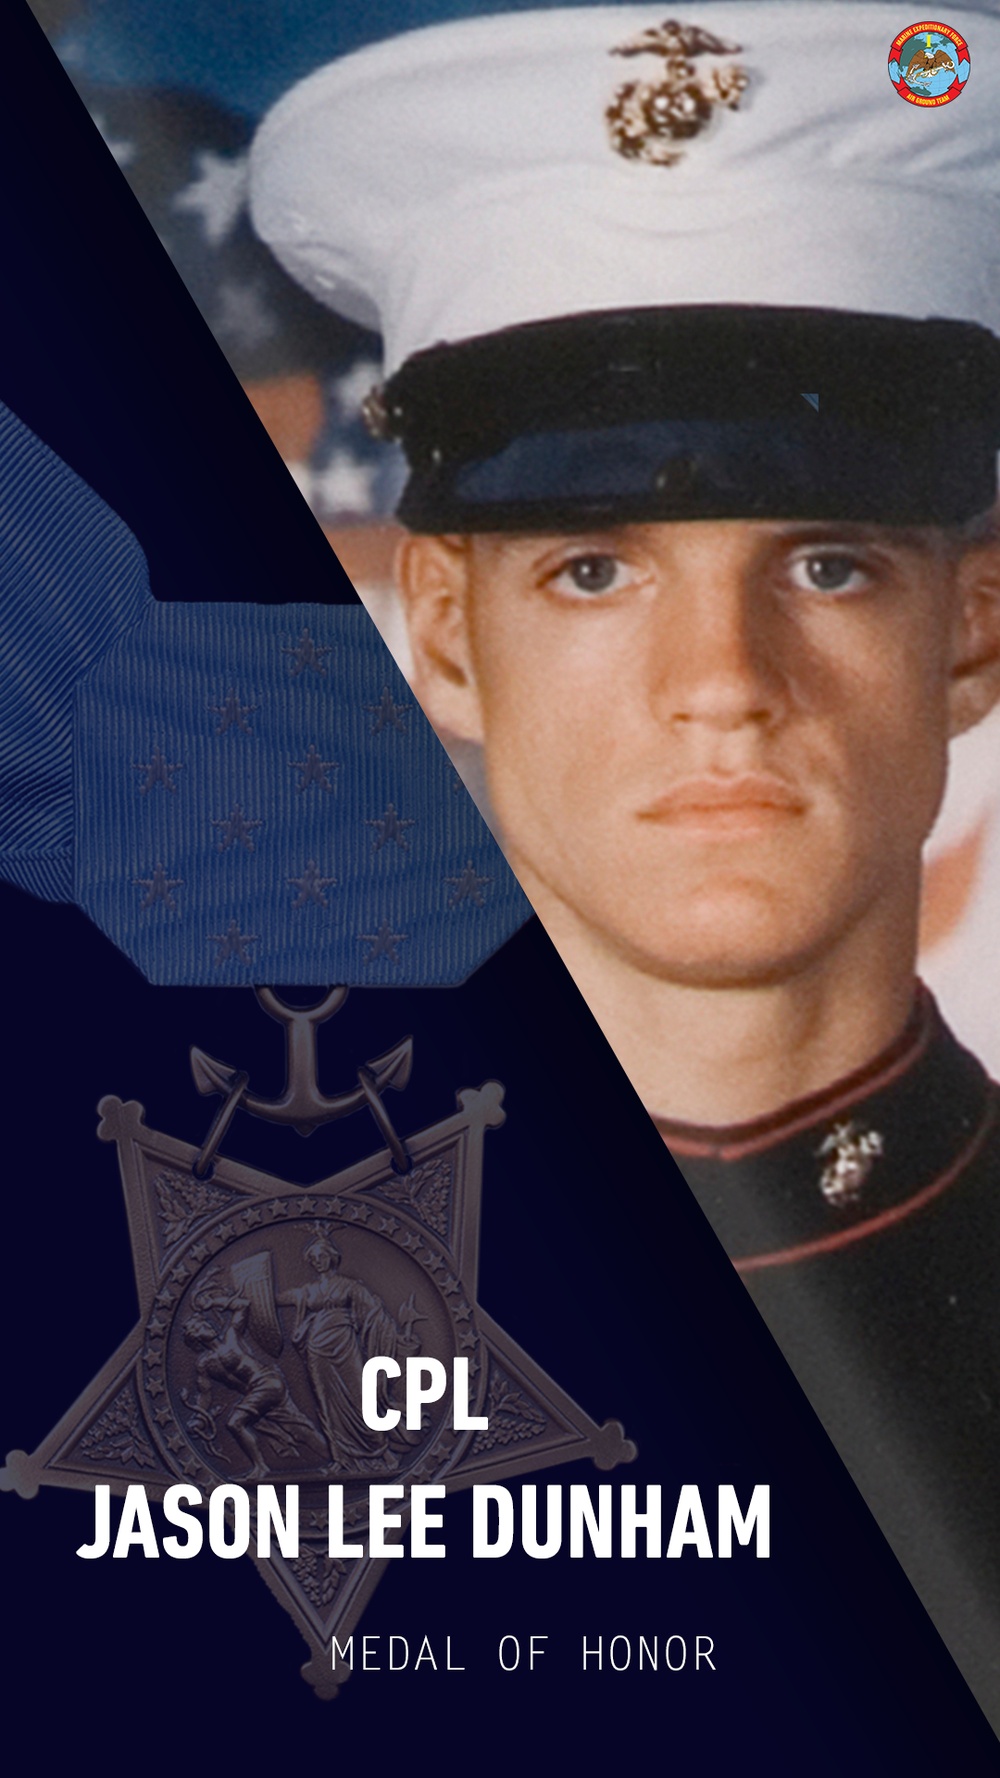 Cpl. Jason Lee Dunham Medal of Honor